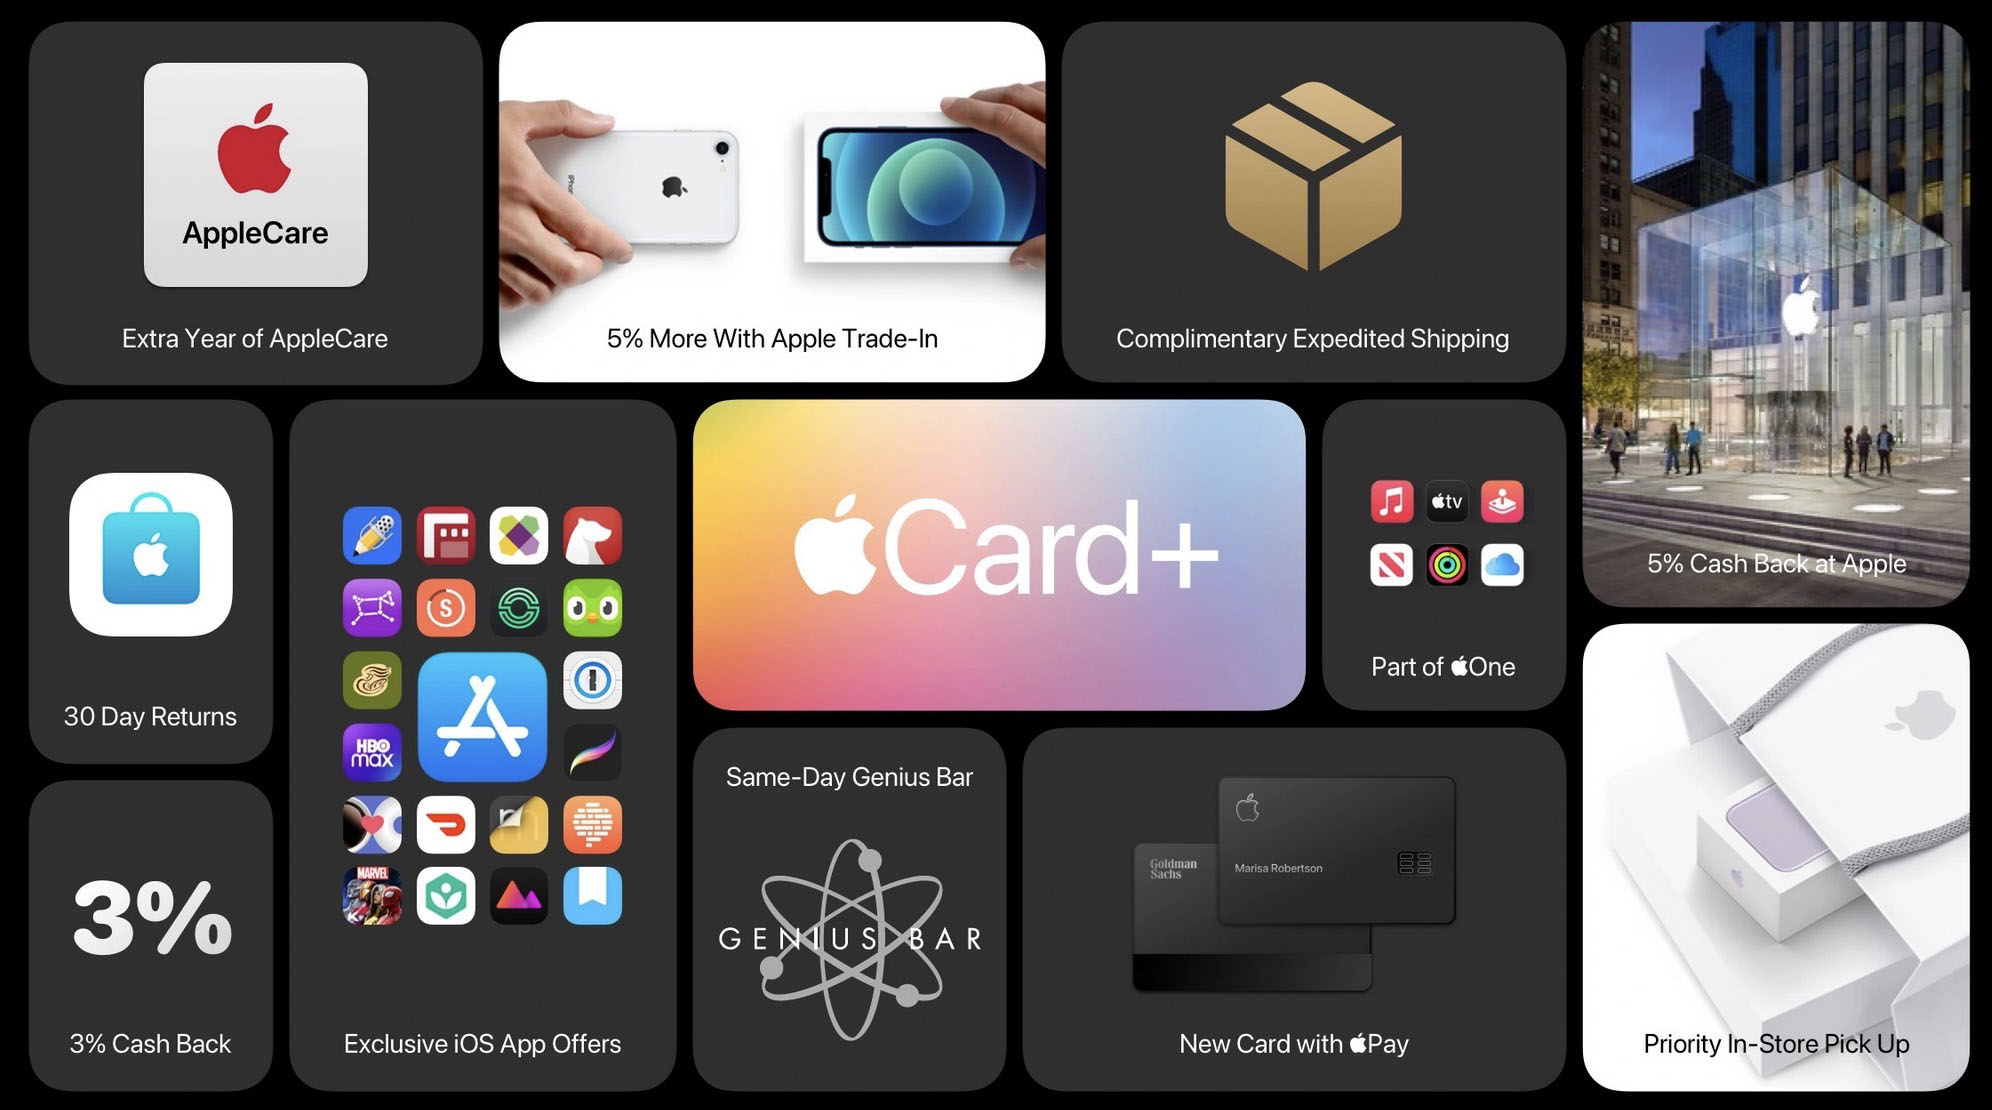 AppleCard+ concept